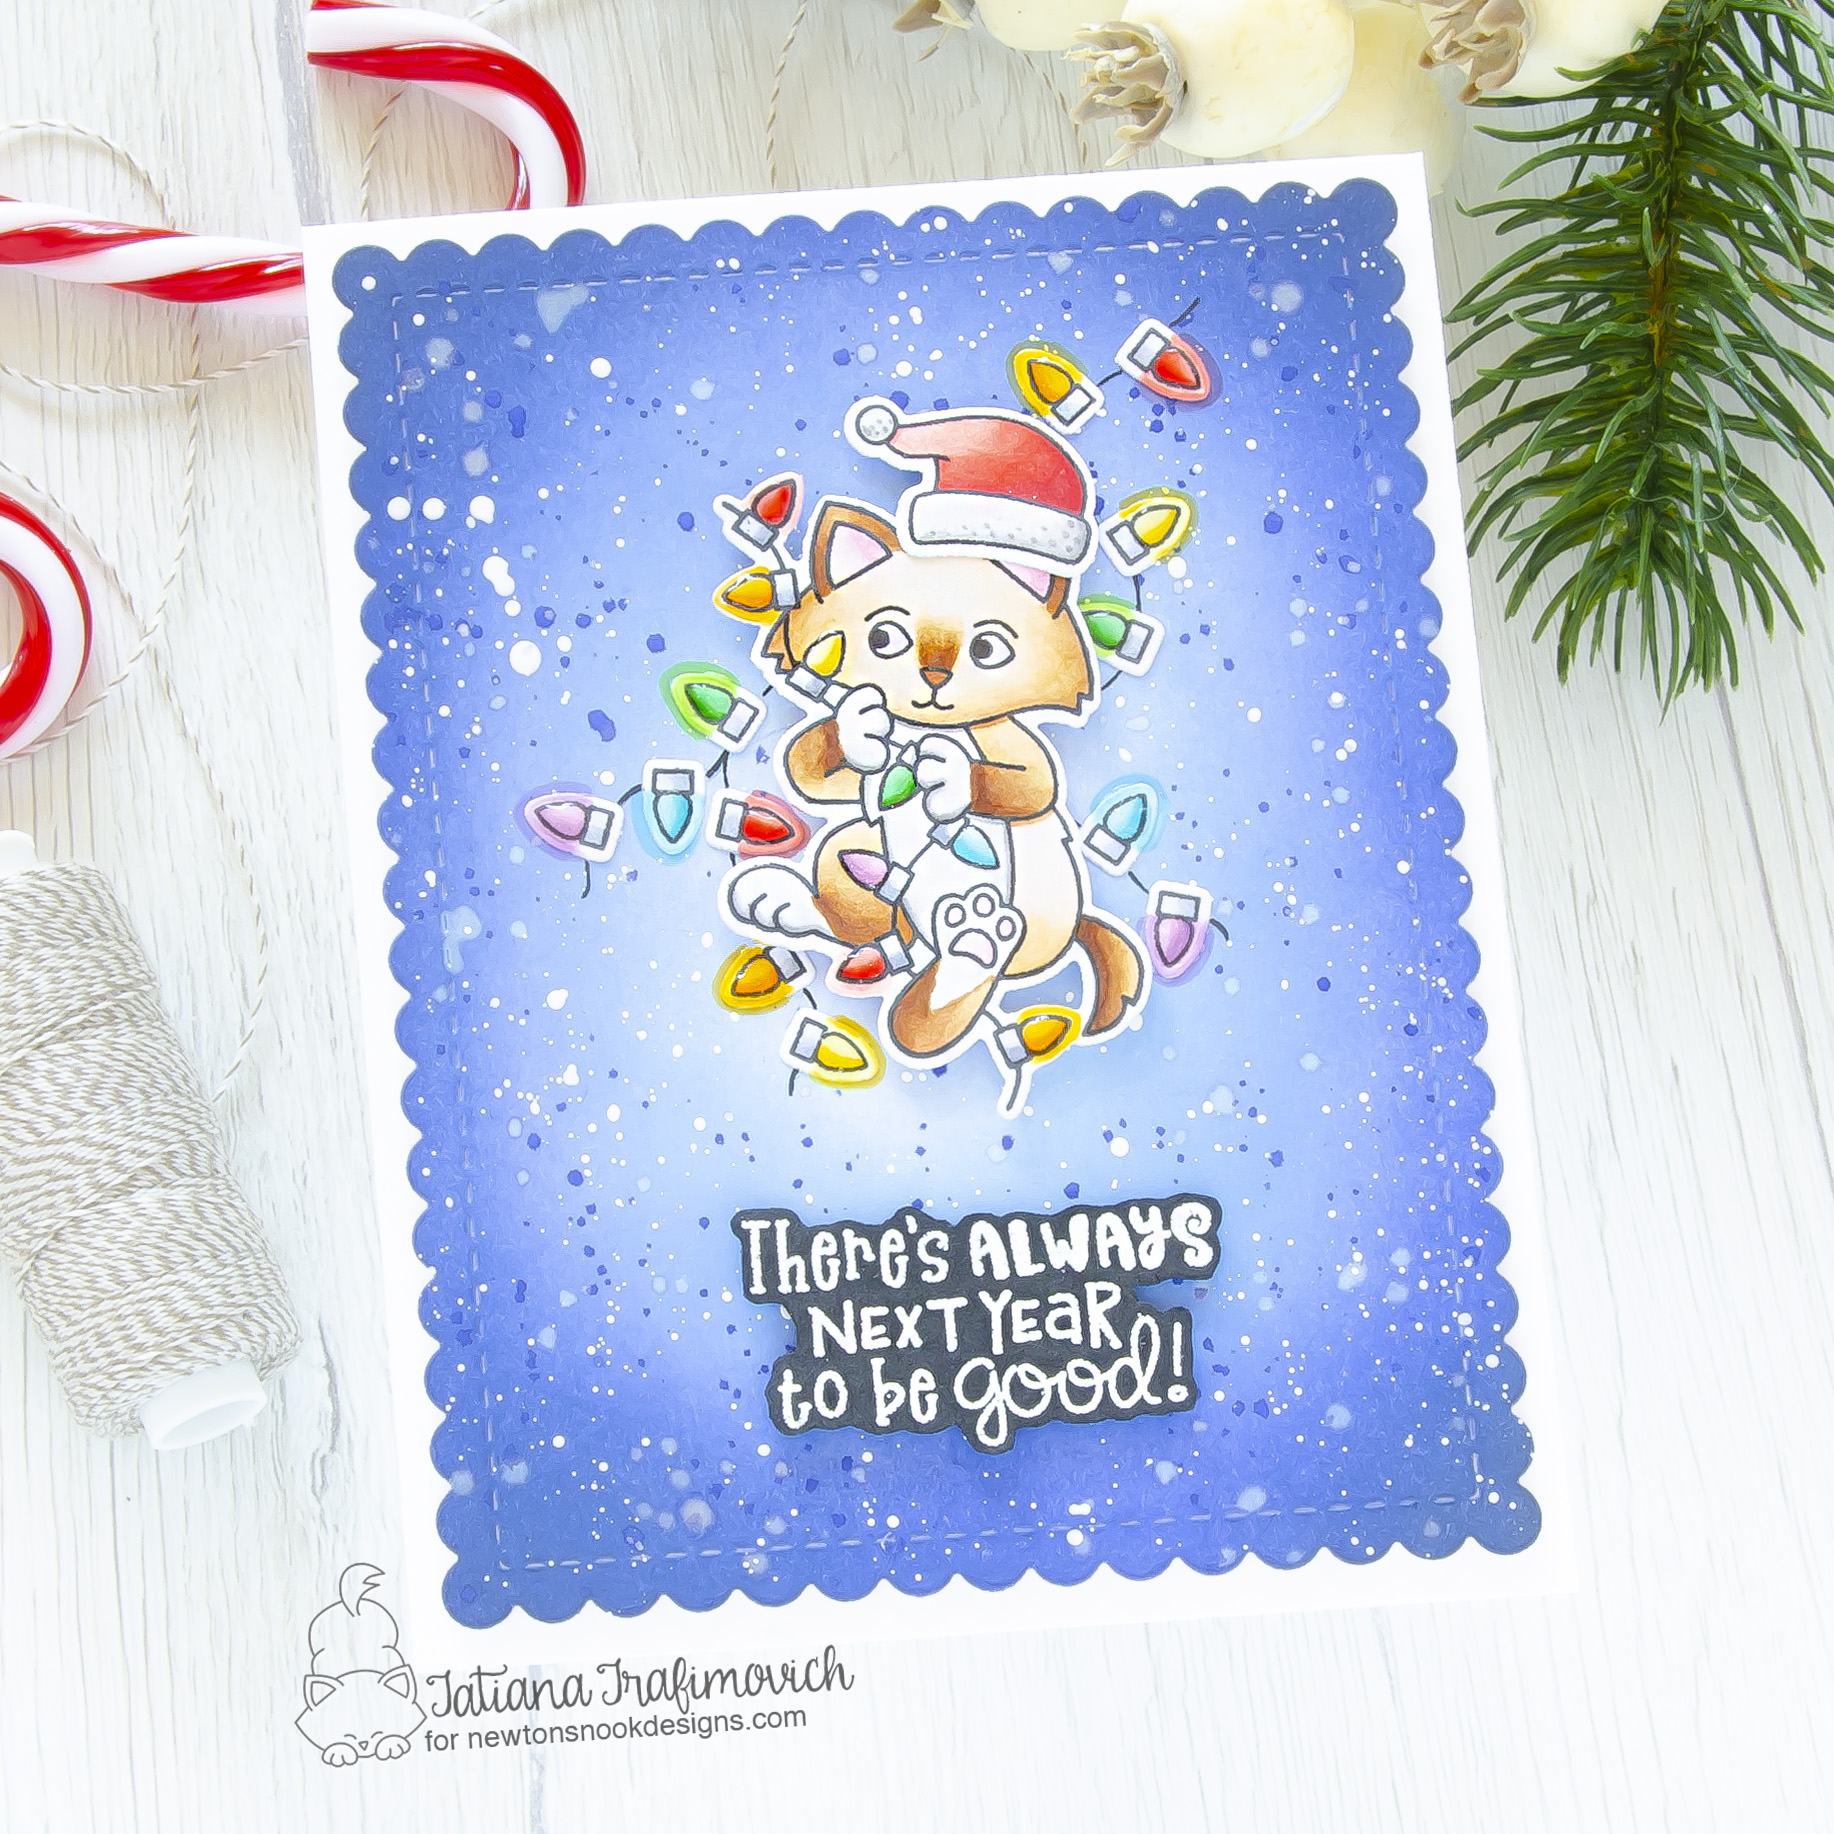 There's Always Next Year To Be Good #handmade card by Tatiana Trafimovich #tatianacraftandart - A Kitten Christmas stamp set by Newton's Nook Designs #newtonsnook